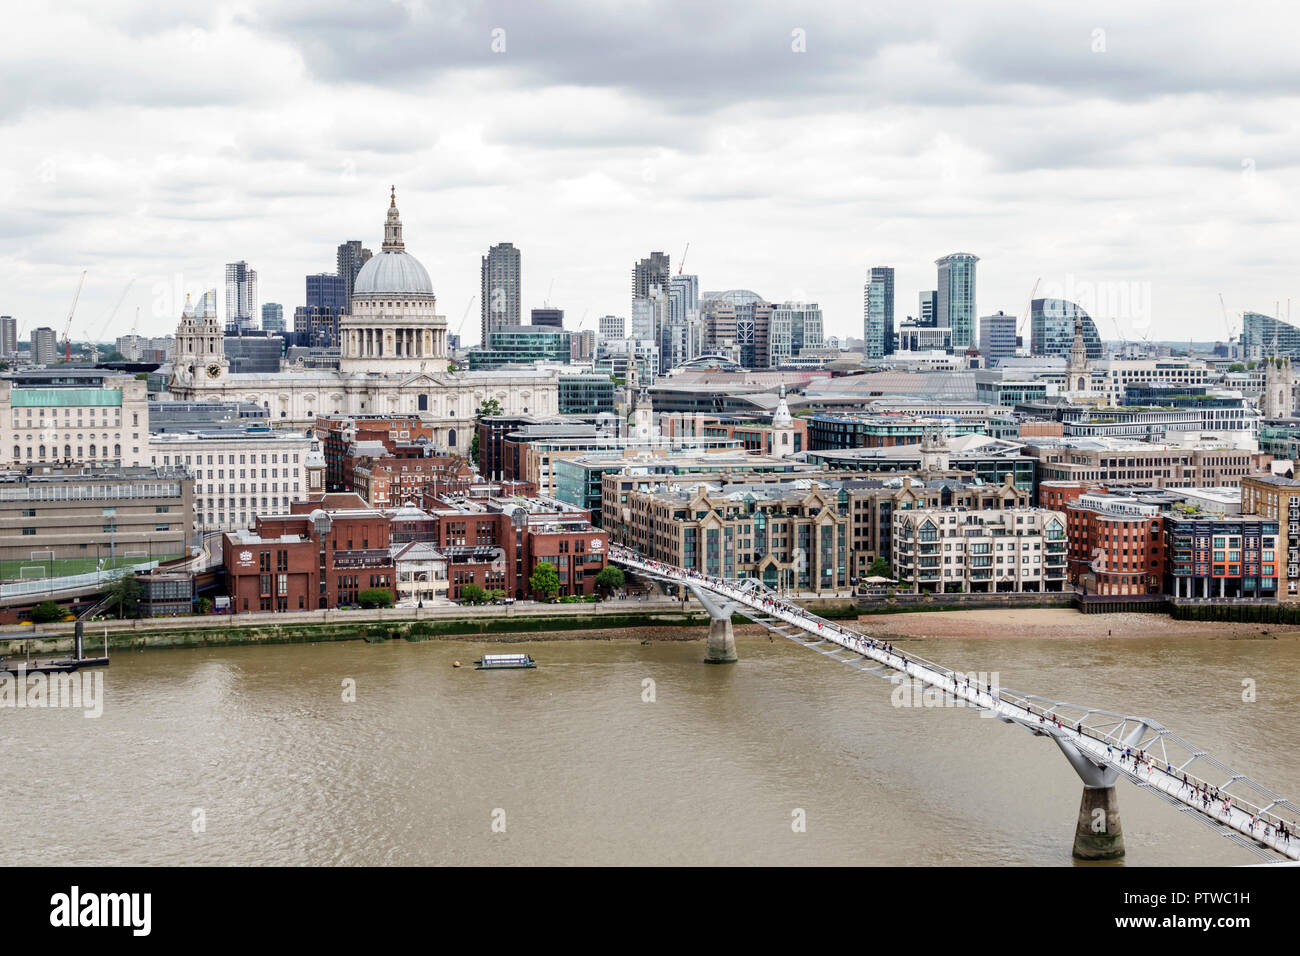 London England,UK,Bankside,River Thames,Tate Modern art museum terrace view,city skyline,gray sky,Millennium Bridge,suspension footbridge,St Paul's Ca Stock Photo